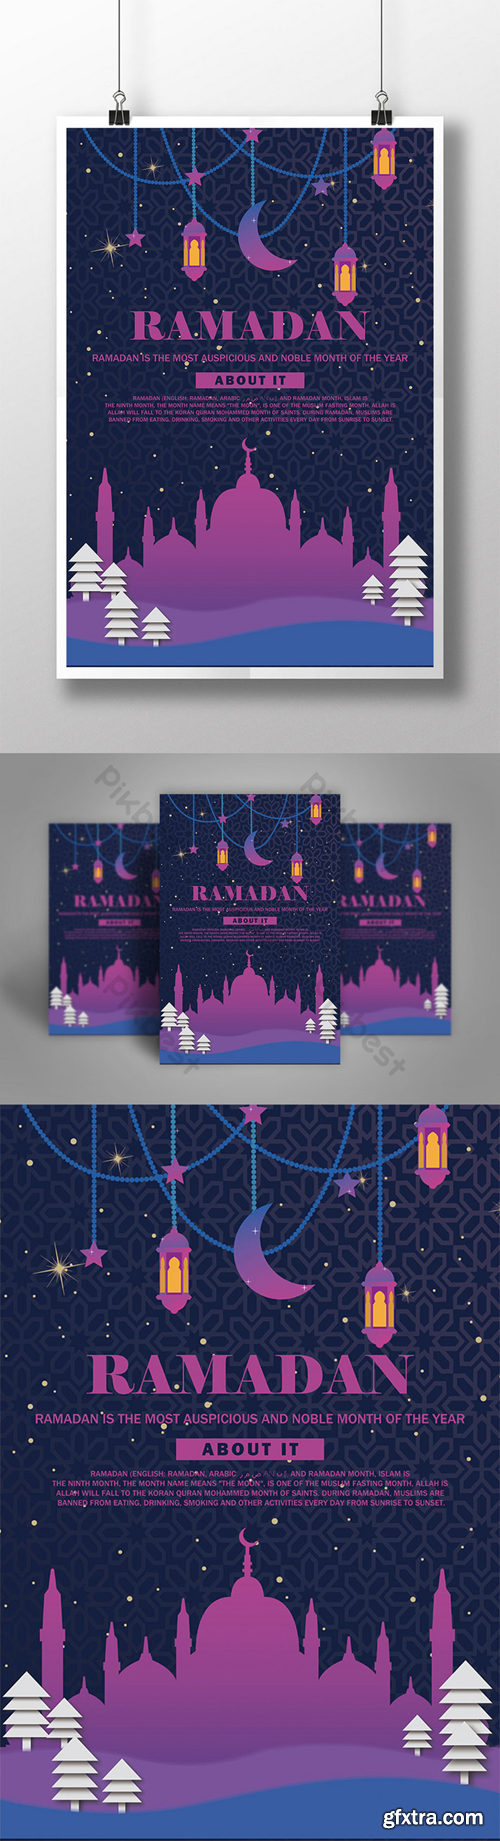 Creative Ramadan posters Template PSD